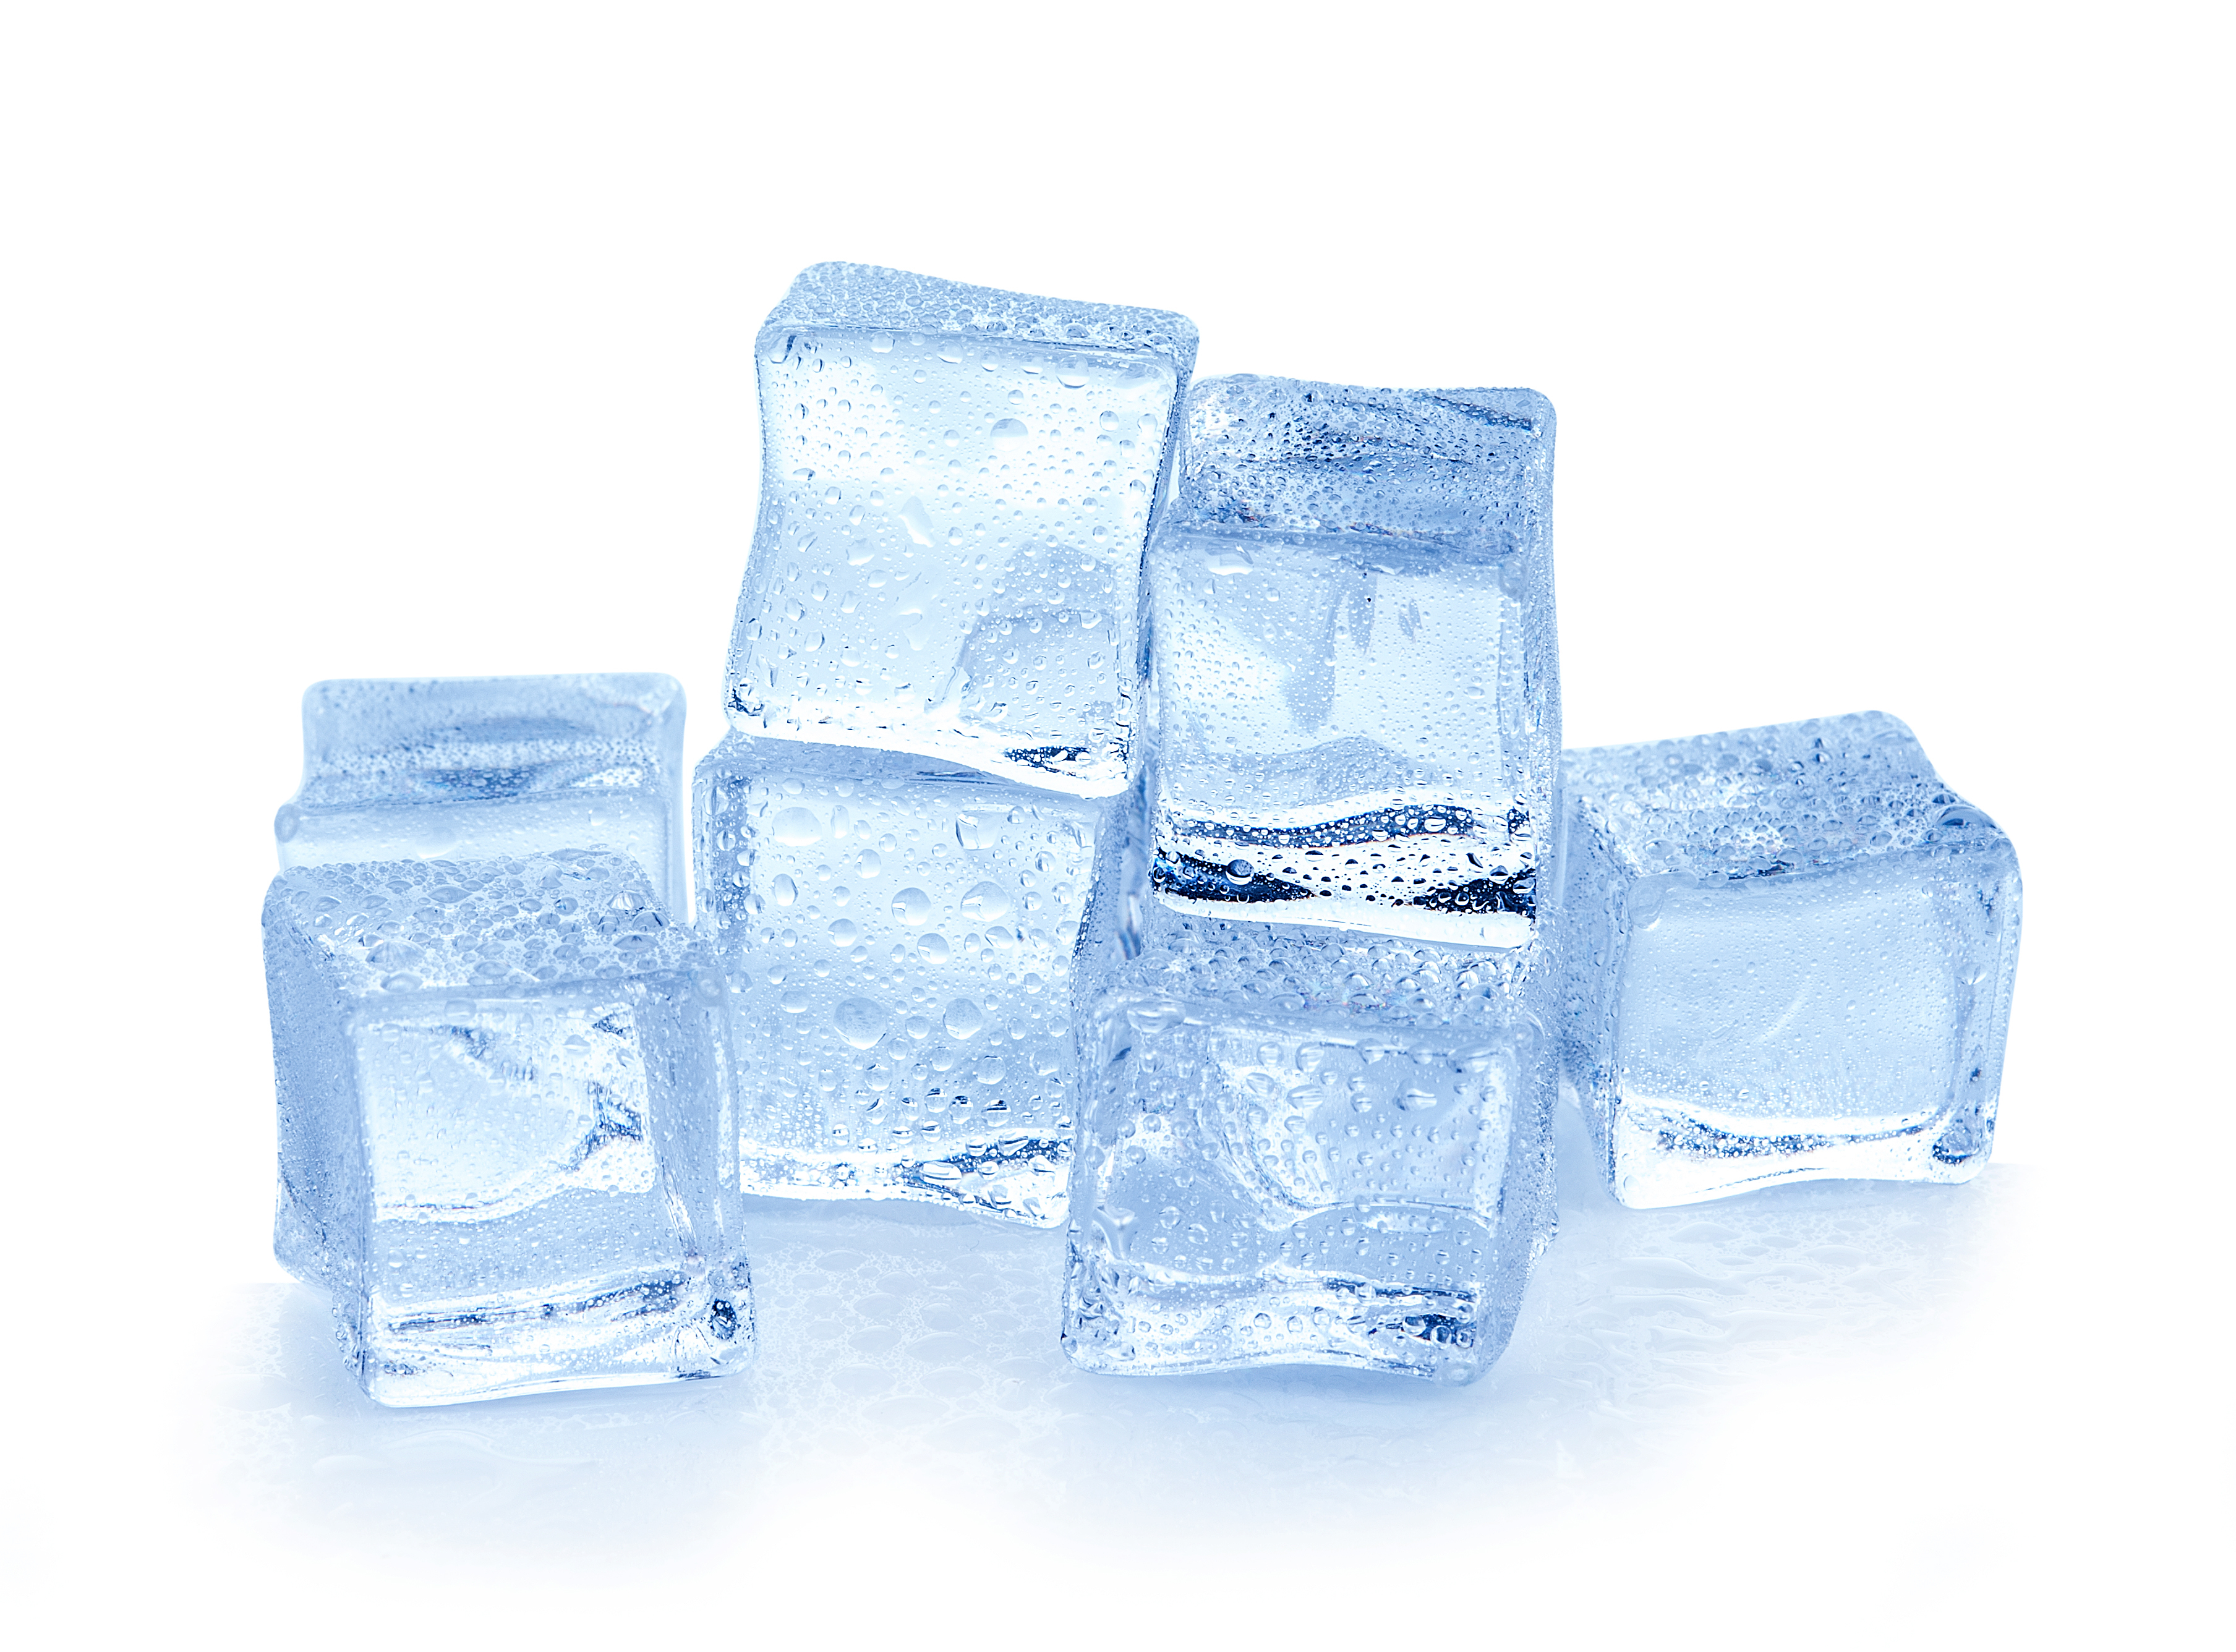 Wc ice cube